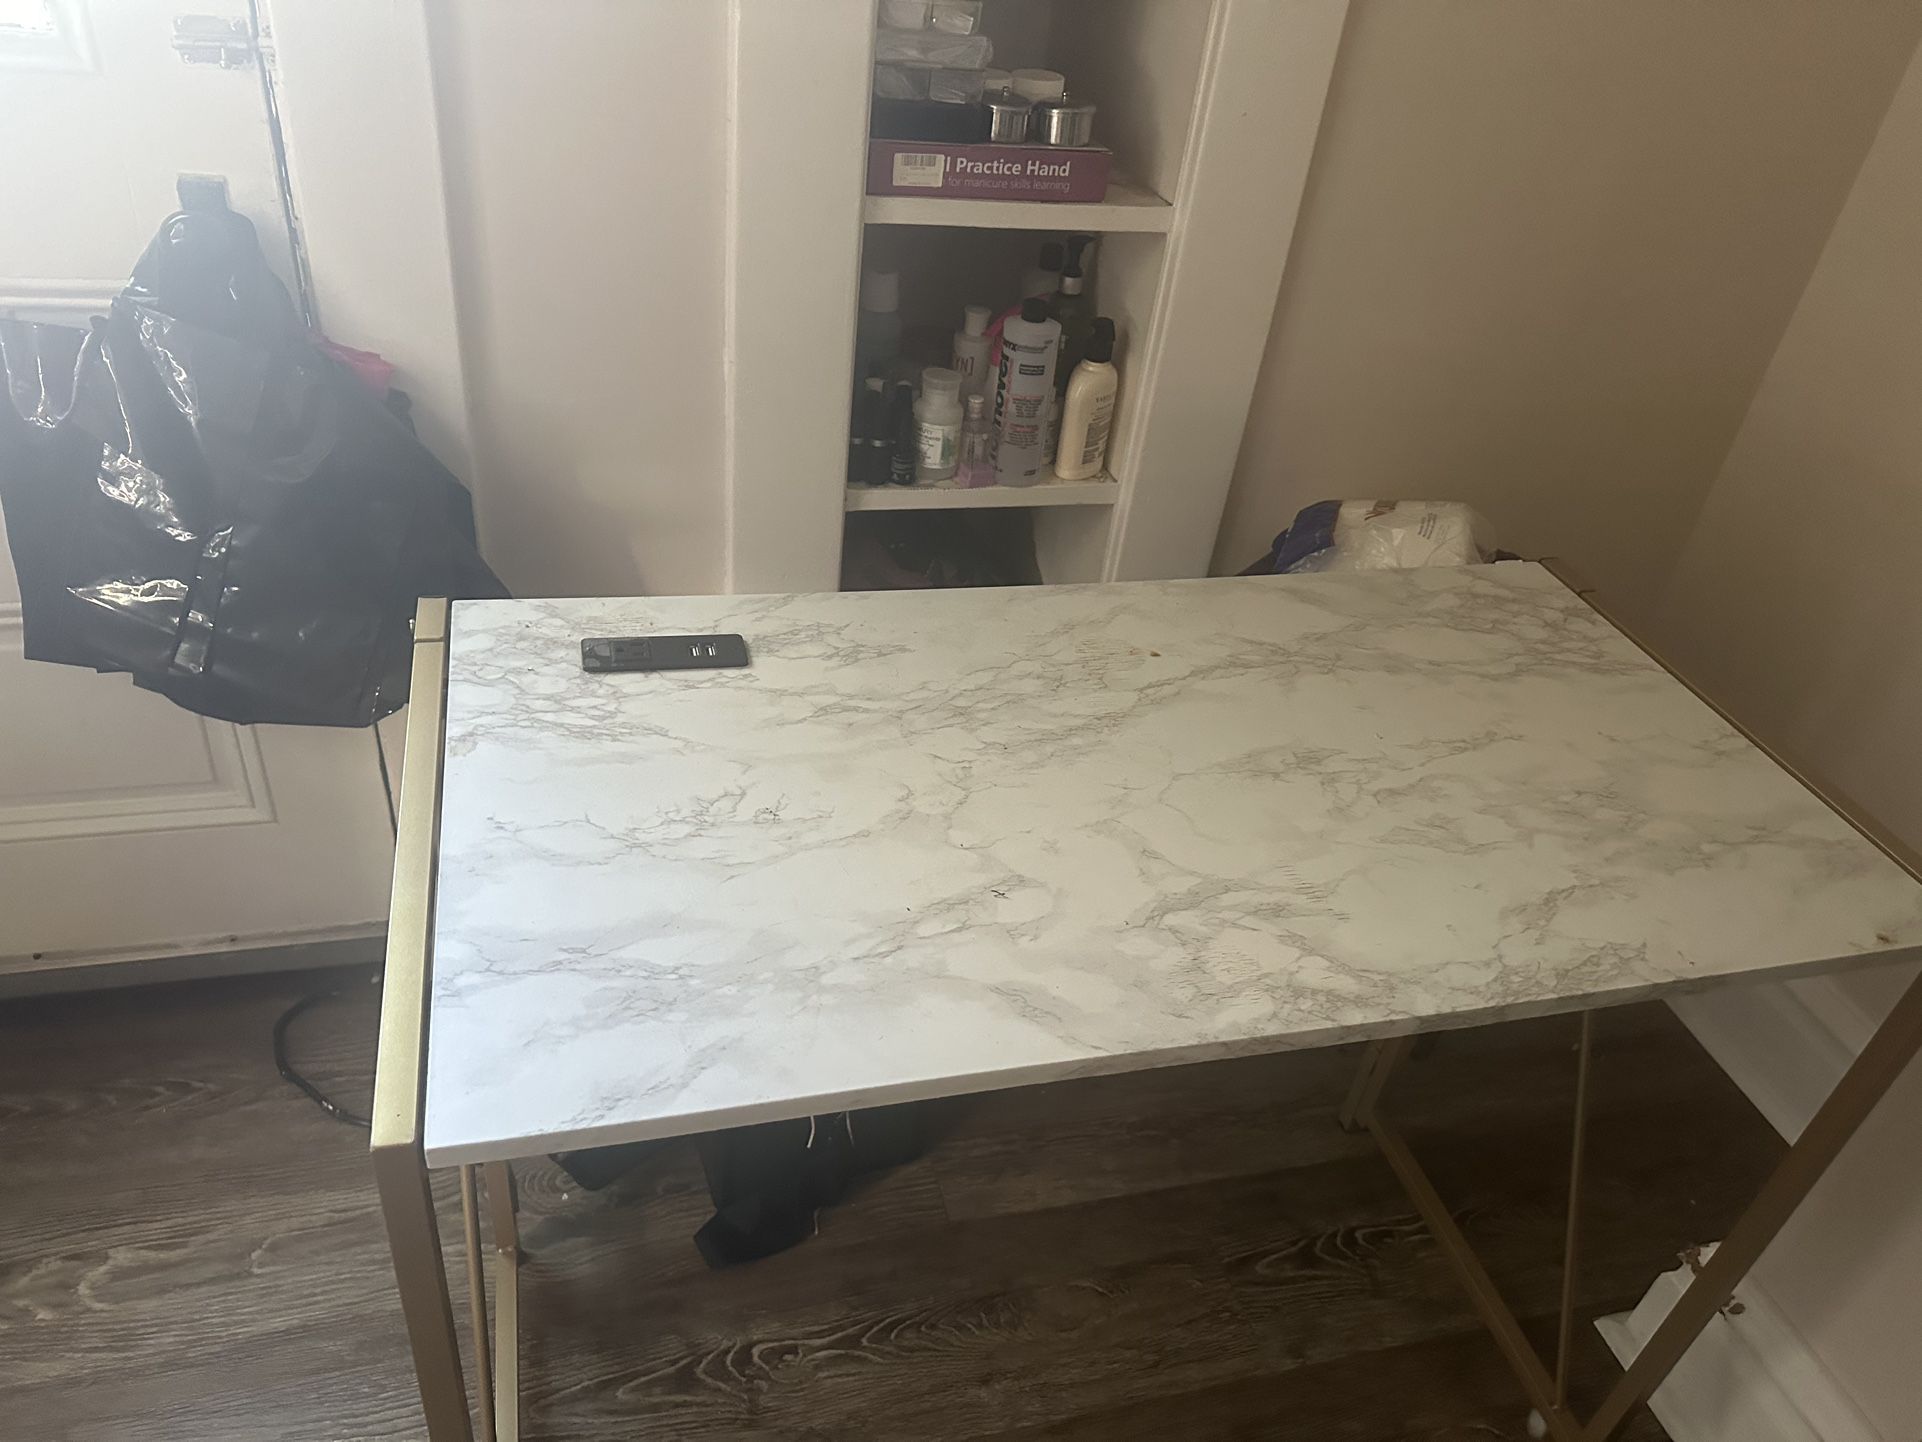 Desk/table